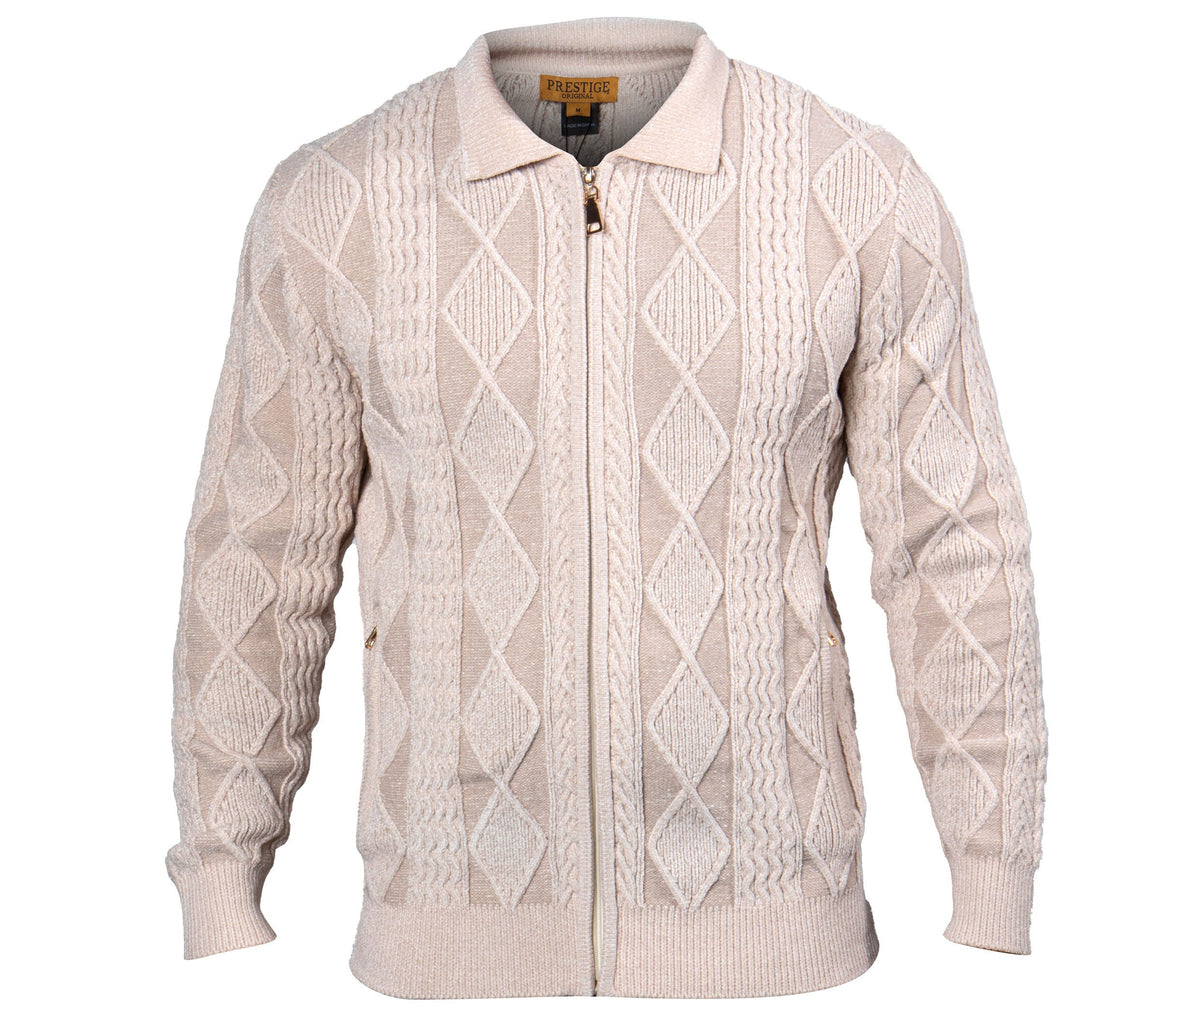 Prestige Cream Cable Knit Zip Up Sweater - Dudes Boutique